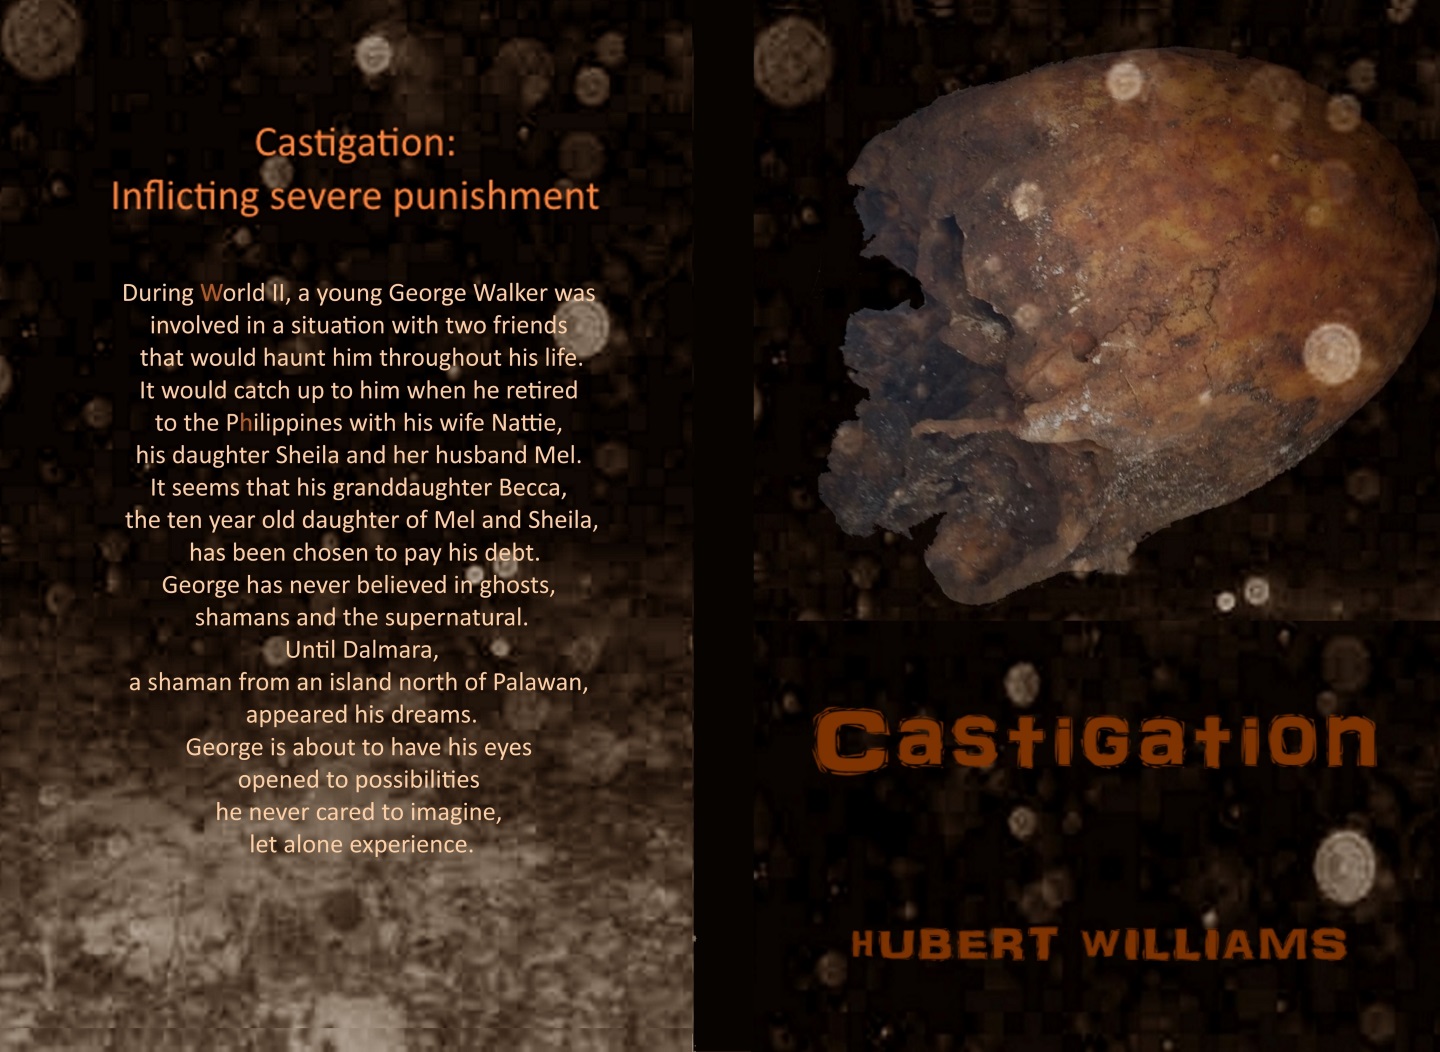 Castigation by Hubert Willians